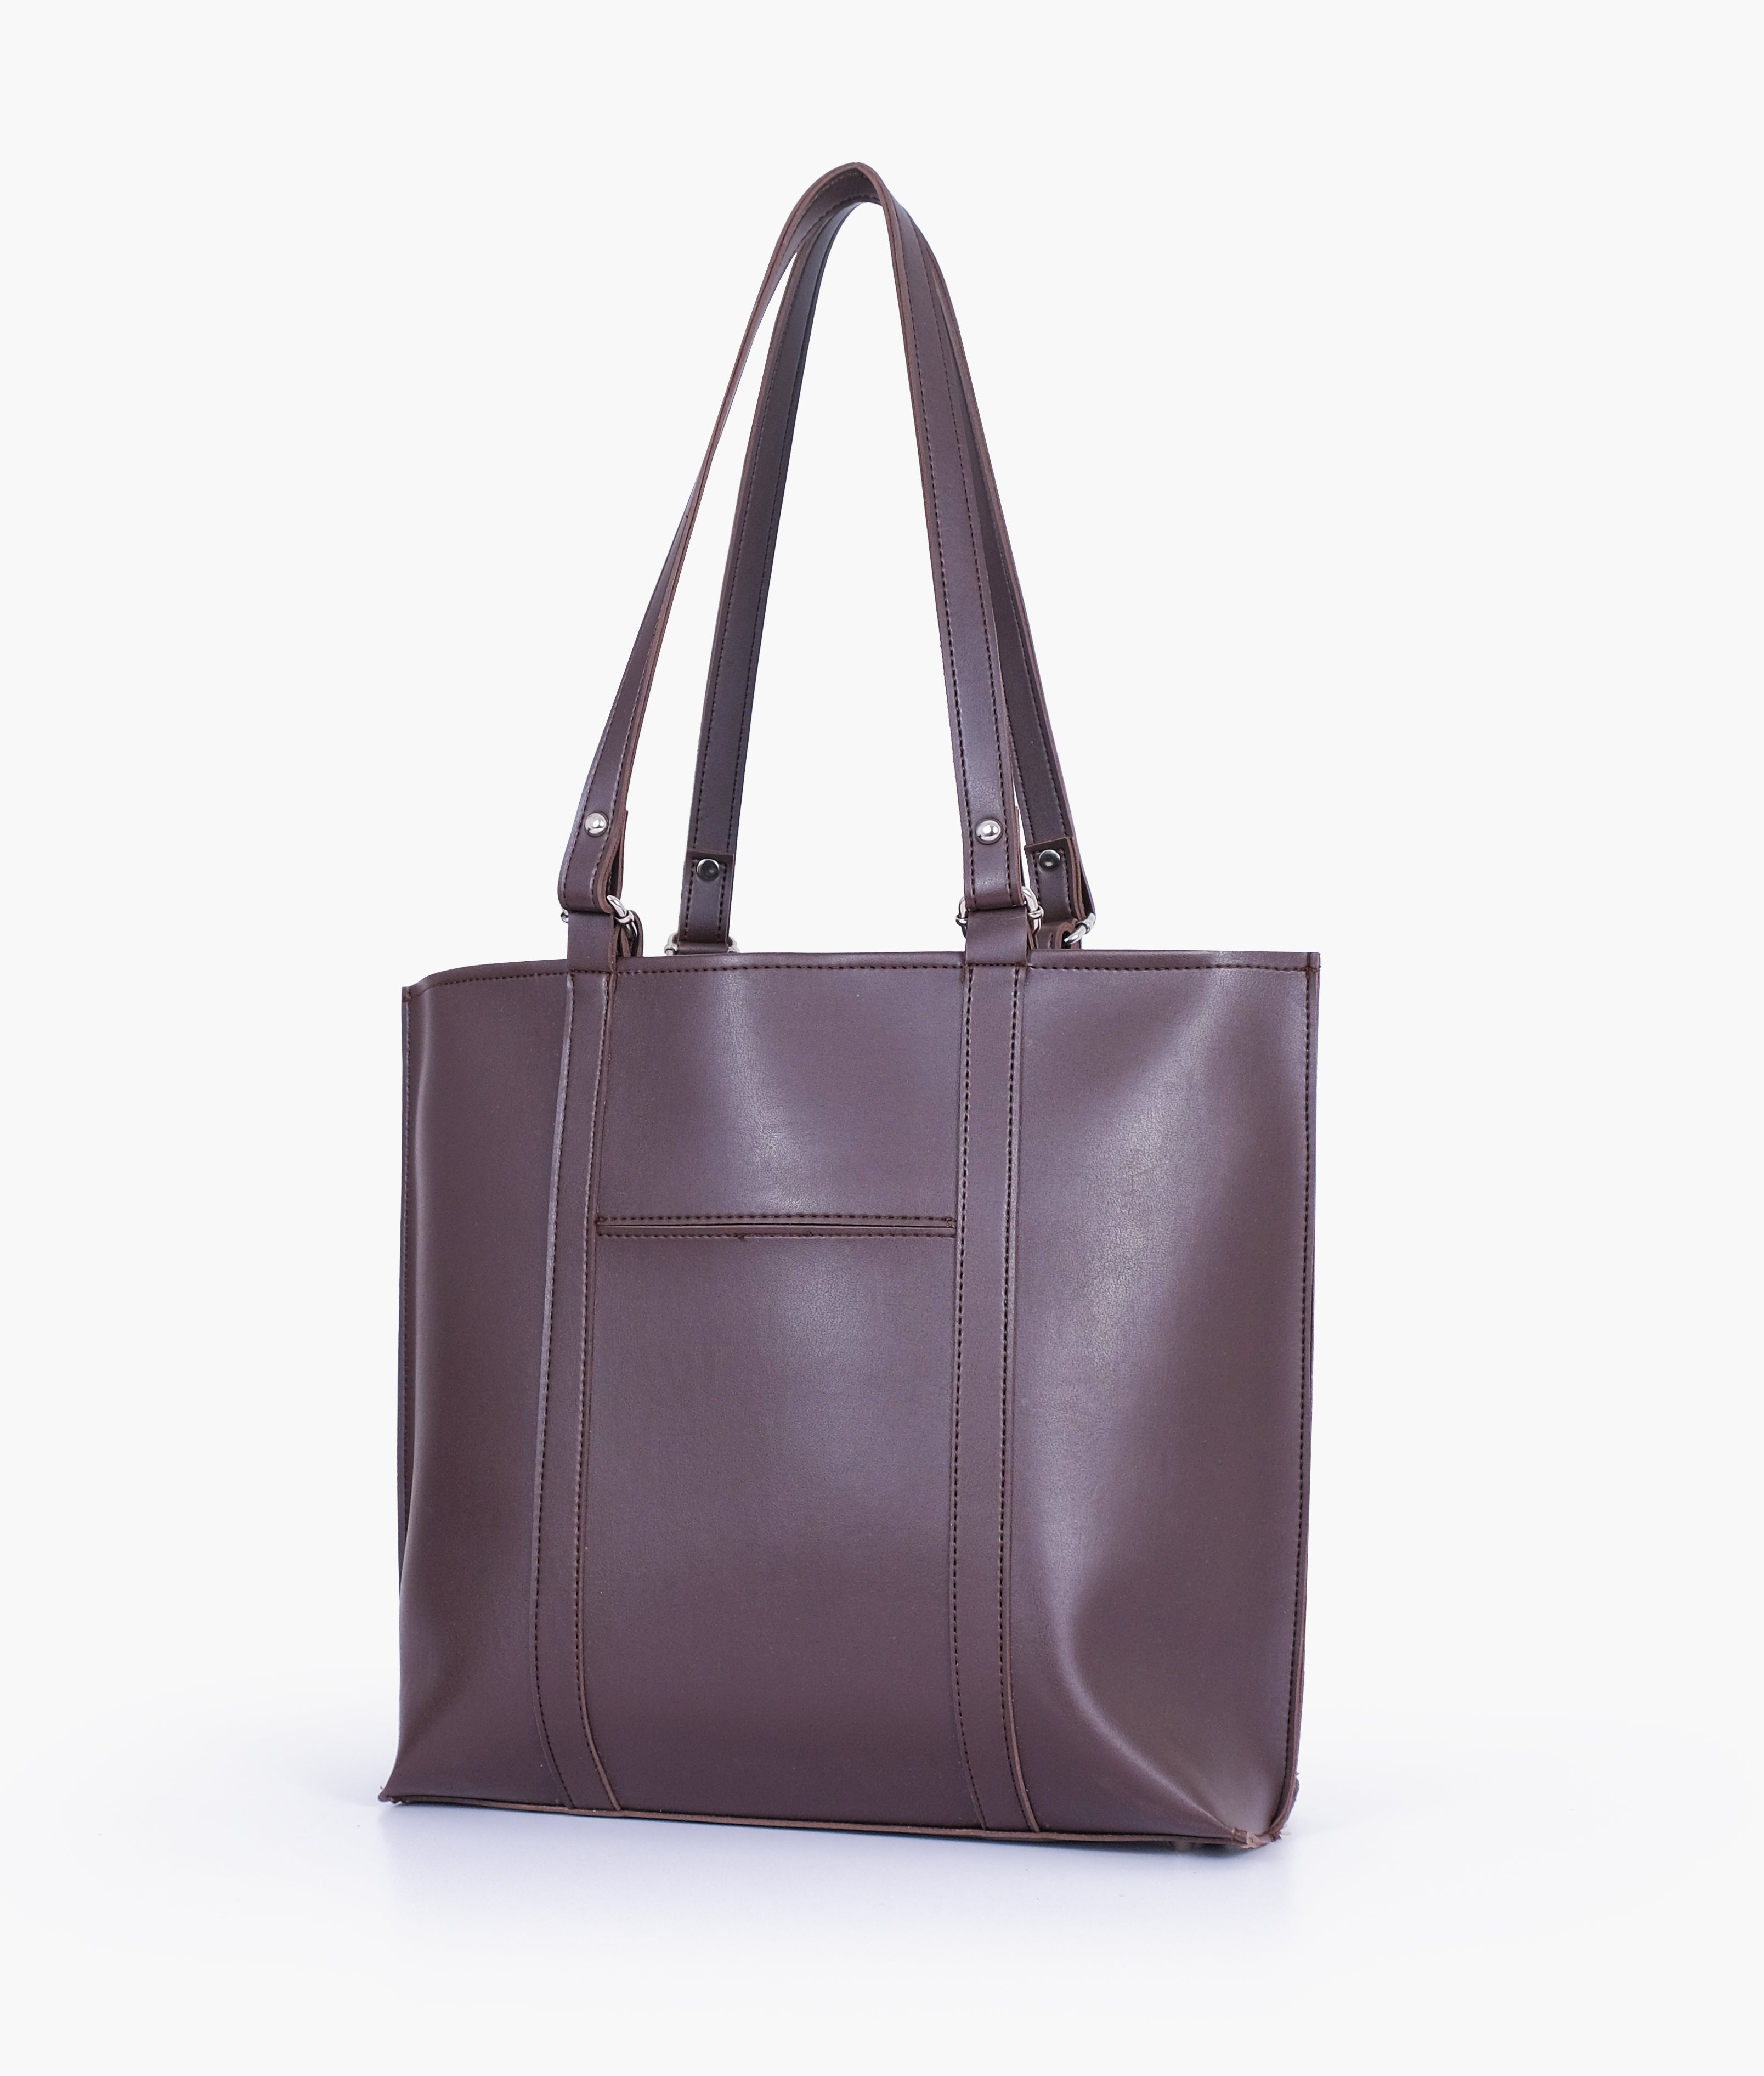 Dark brown double-handle tote bag